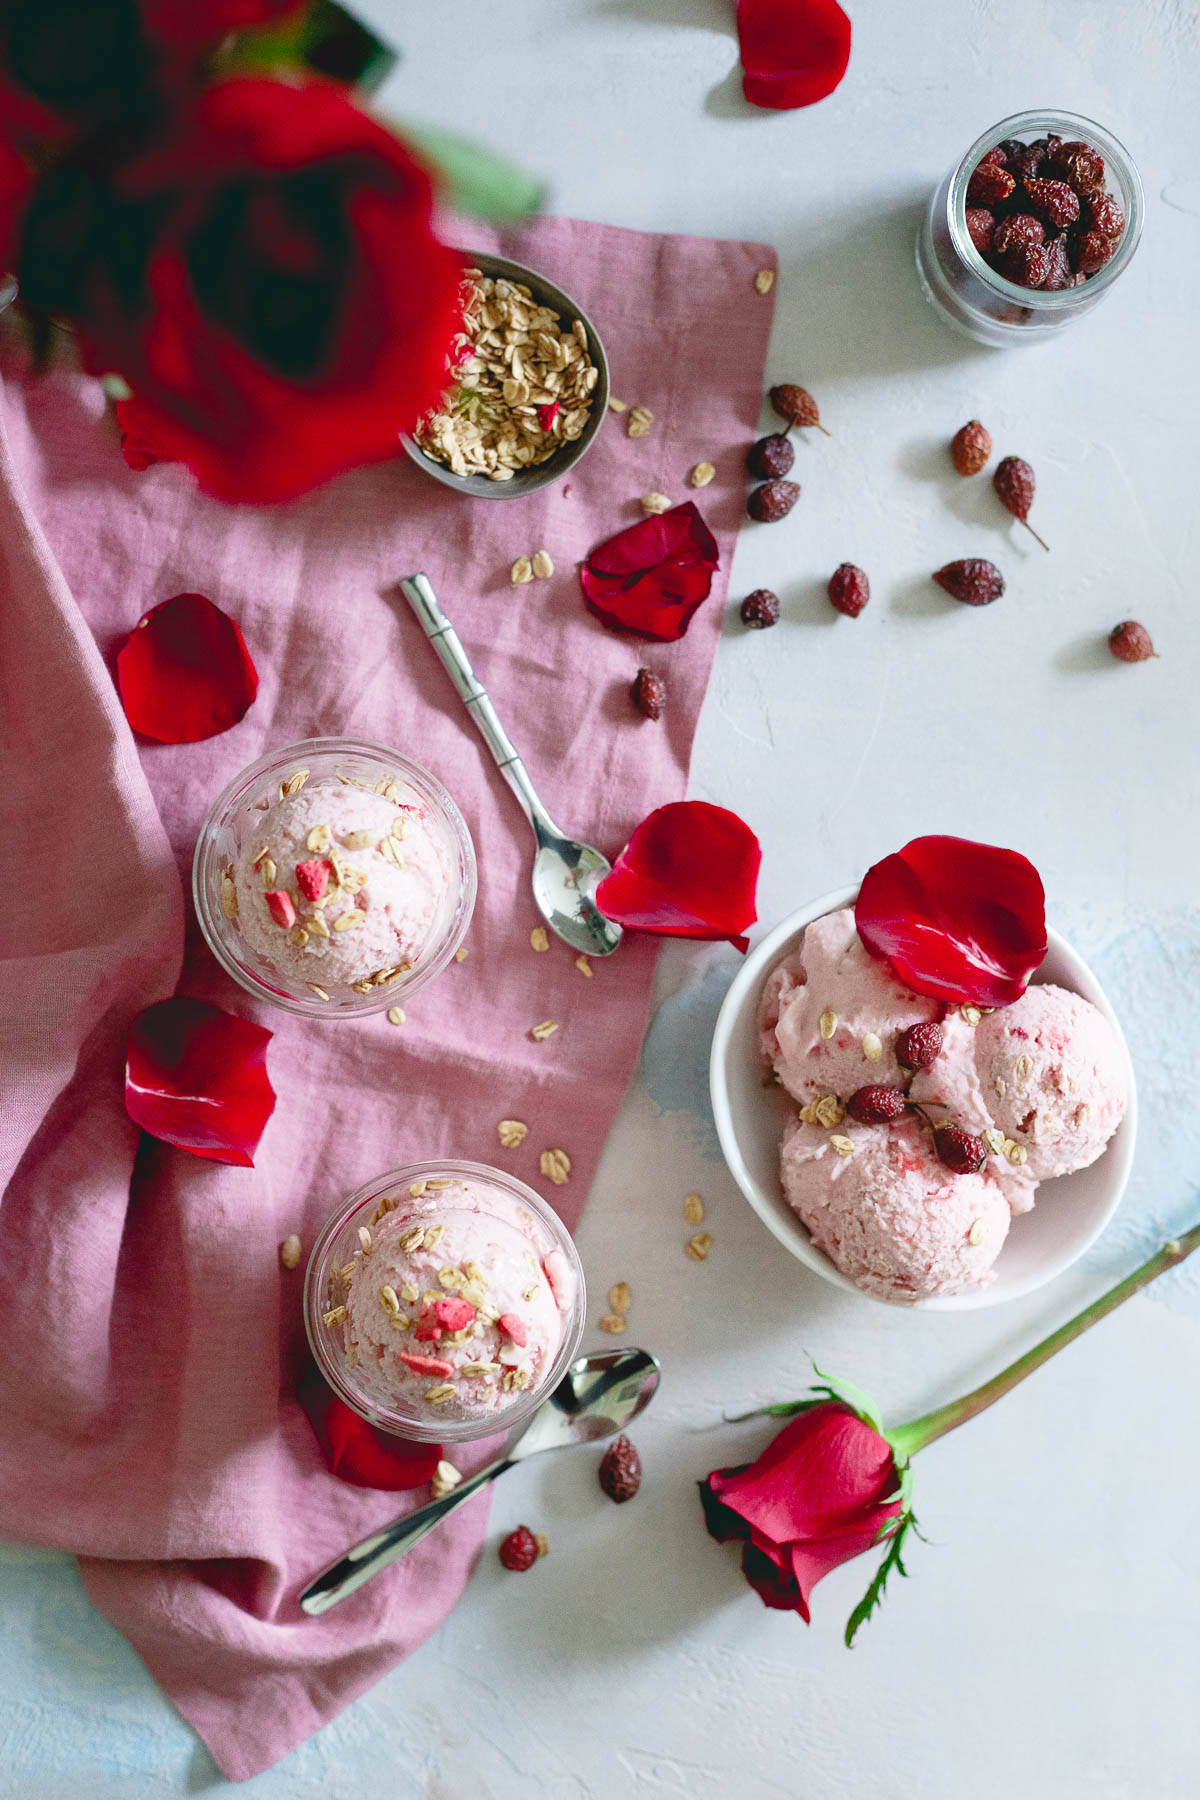 Half ice cream, half frozen yogurt this rosehip and strawberry dessert screams spring!